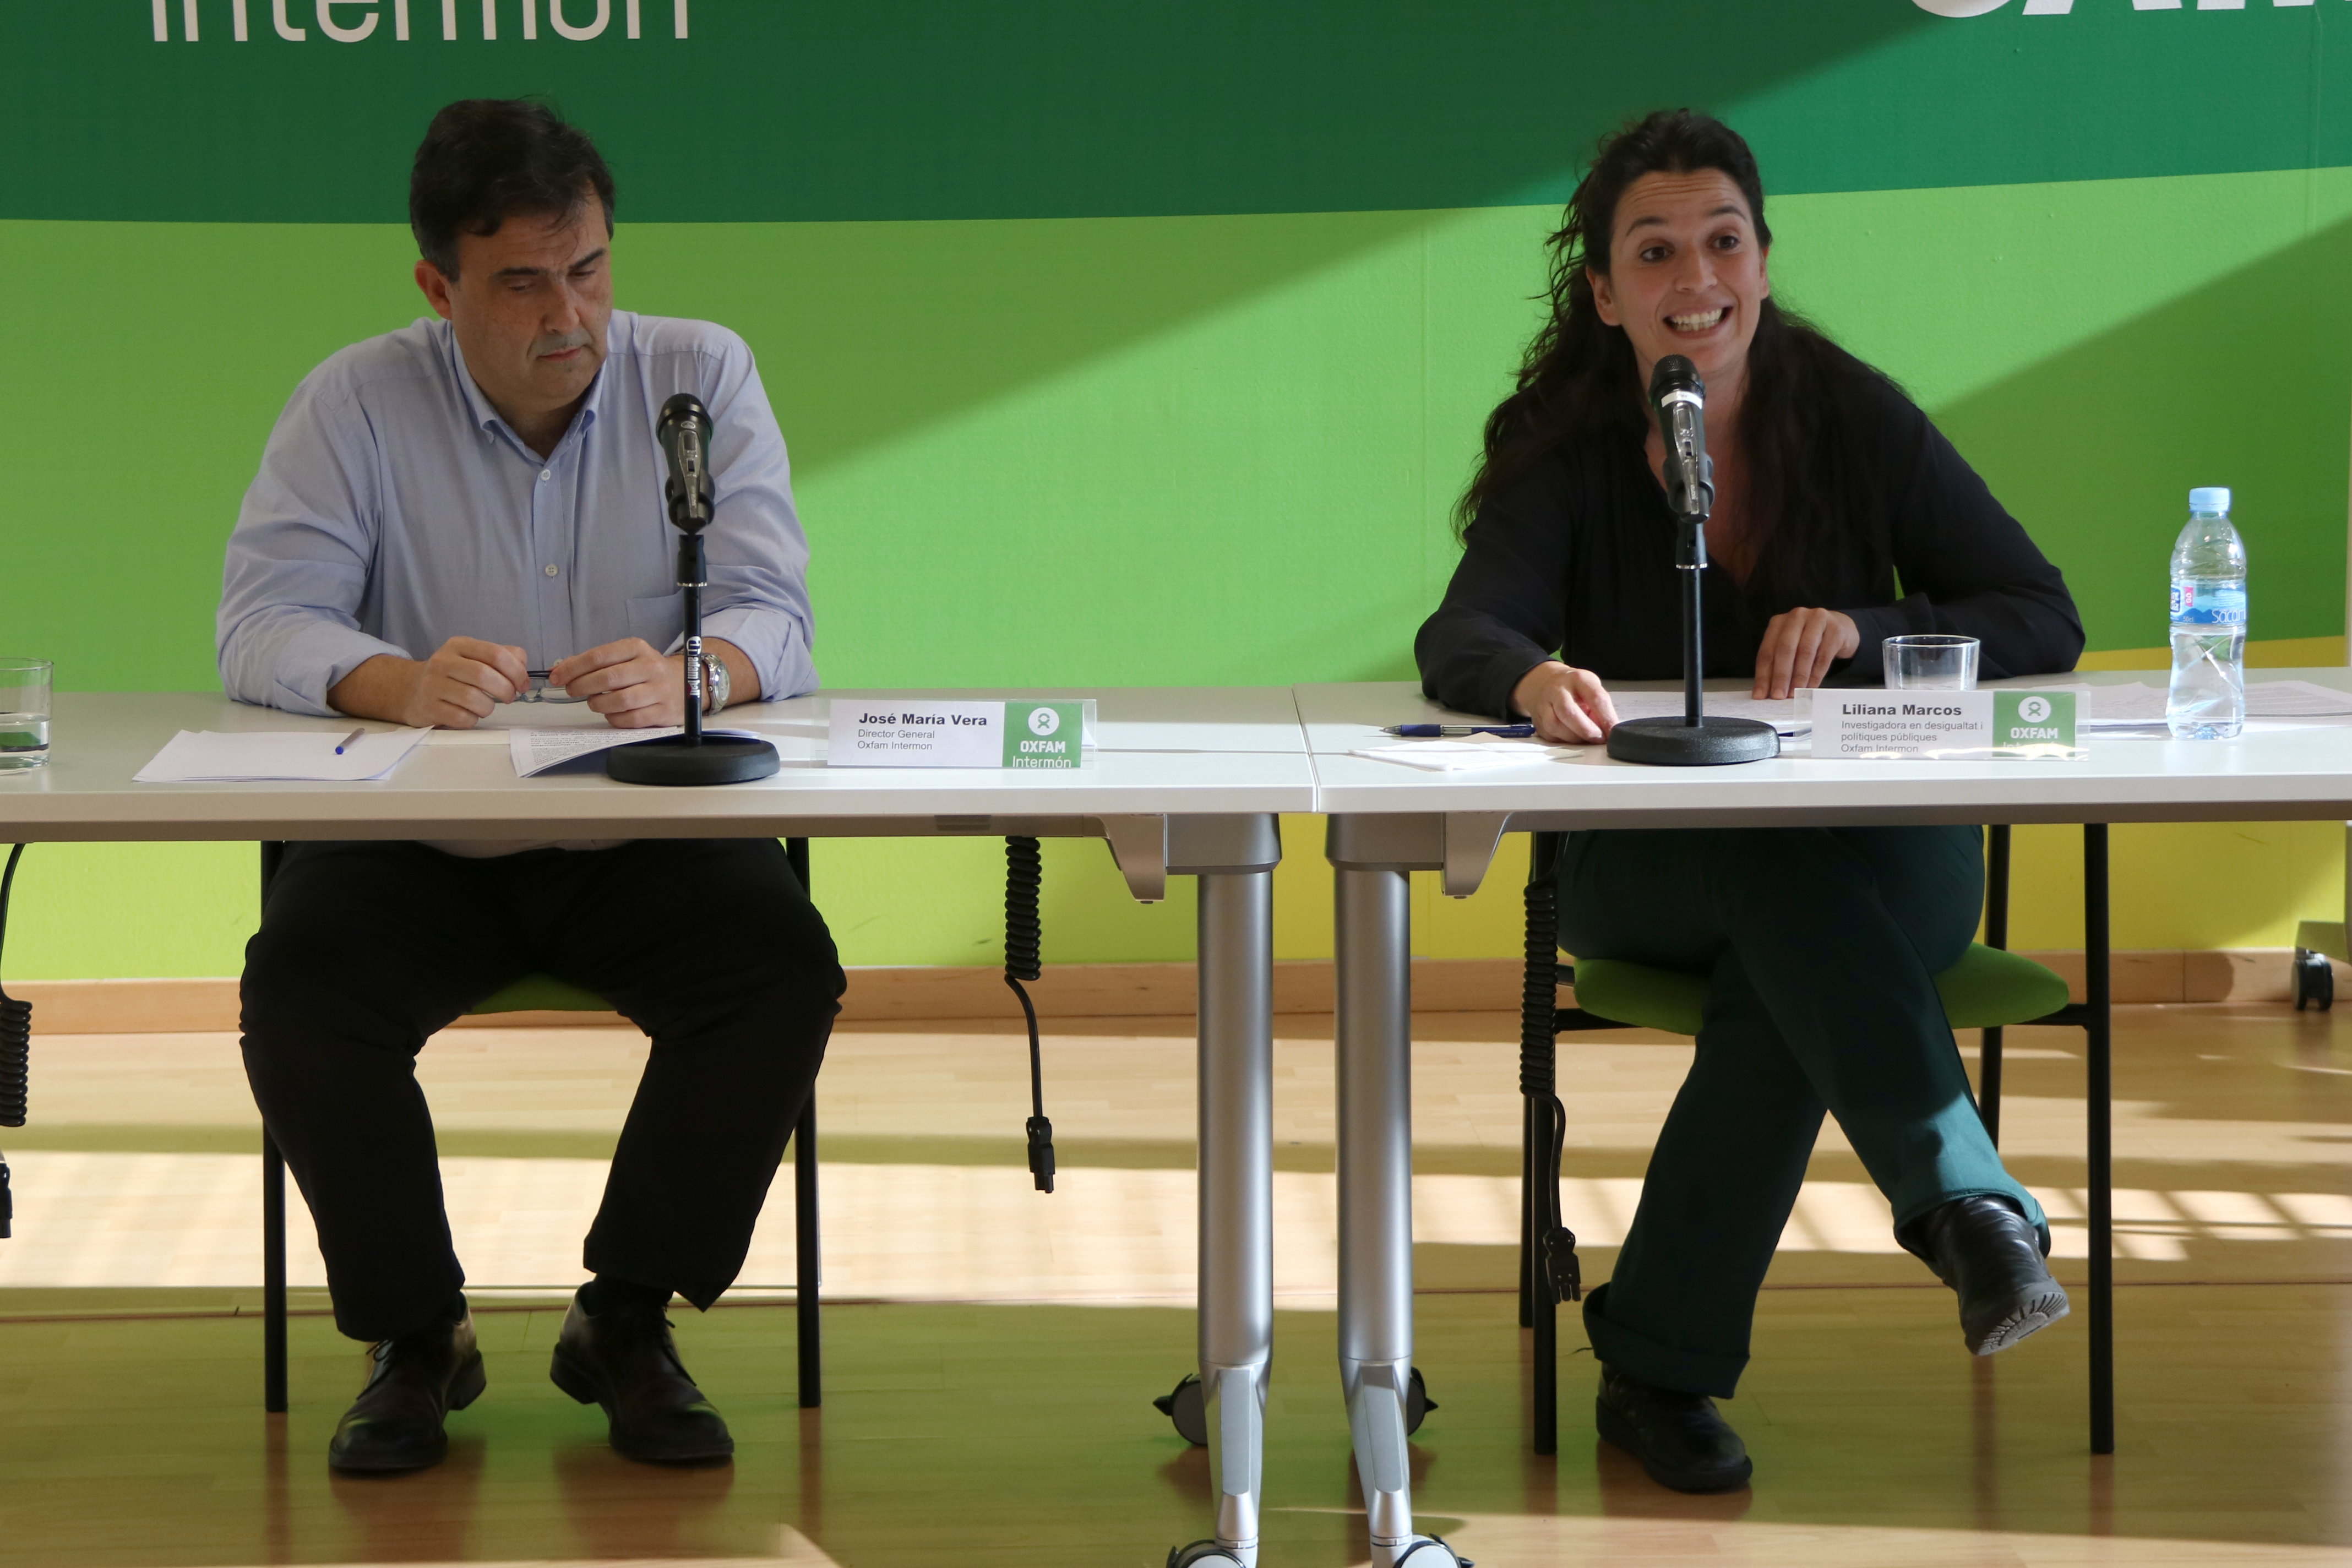 Oxfam general director in Spain, José Maria Vera, alongside researcher Liliana Marcos (by ACN)